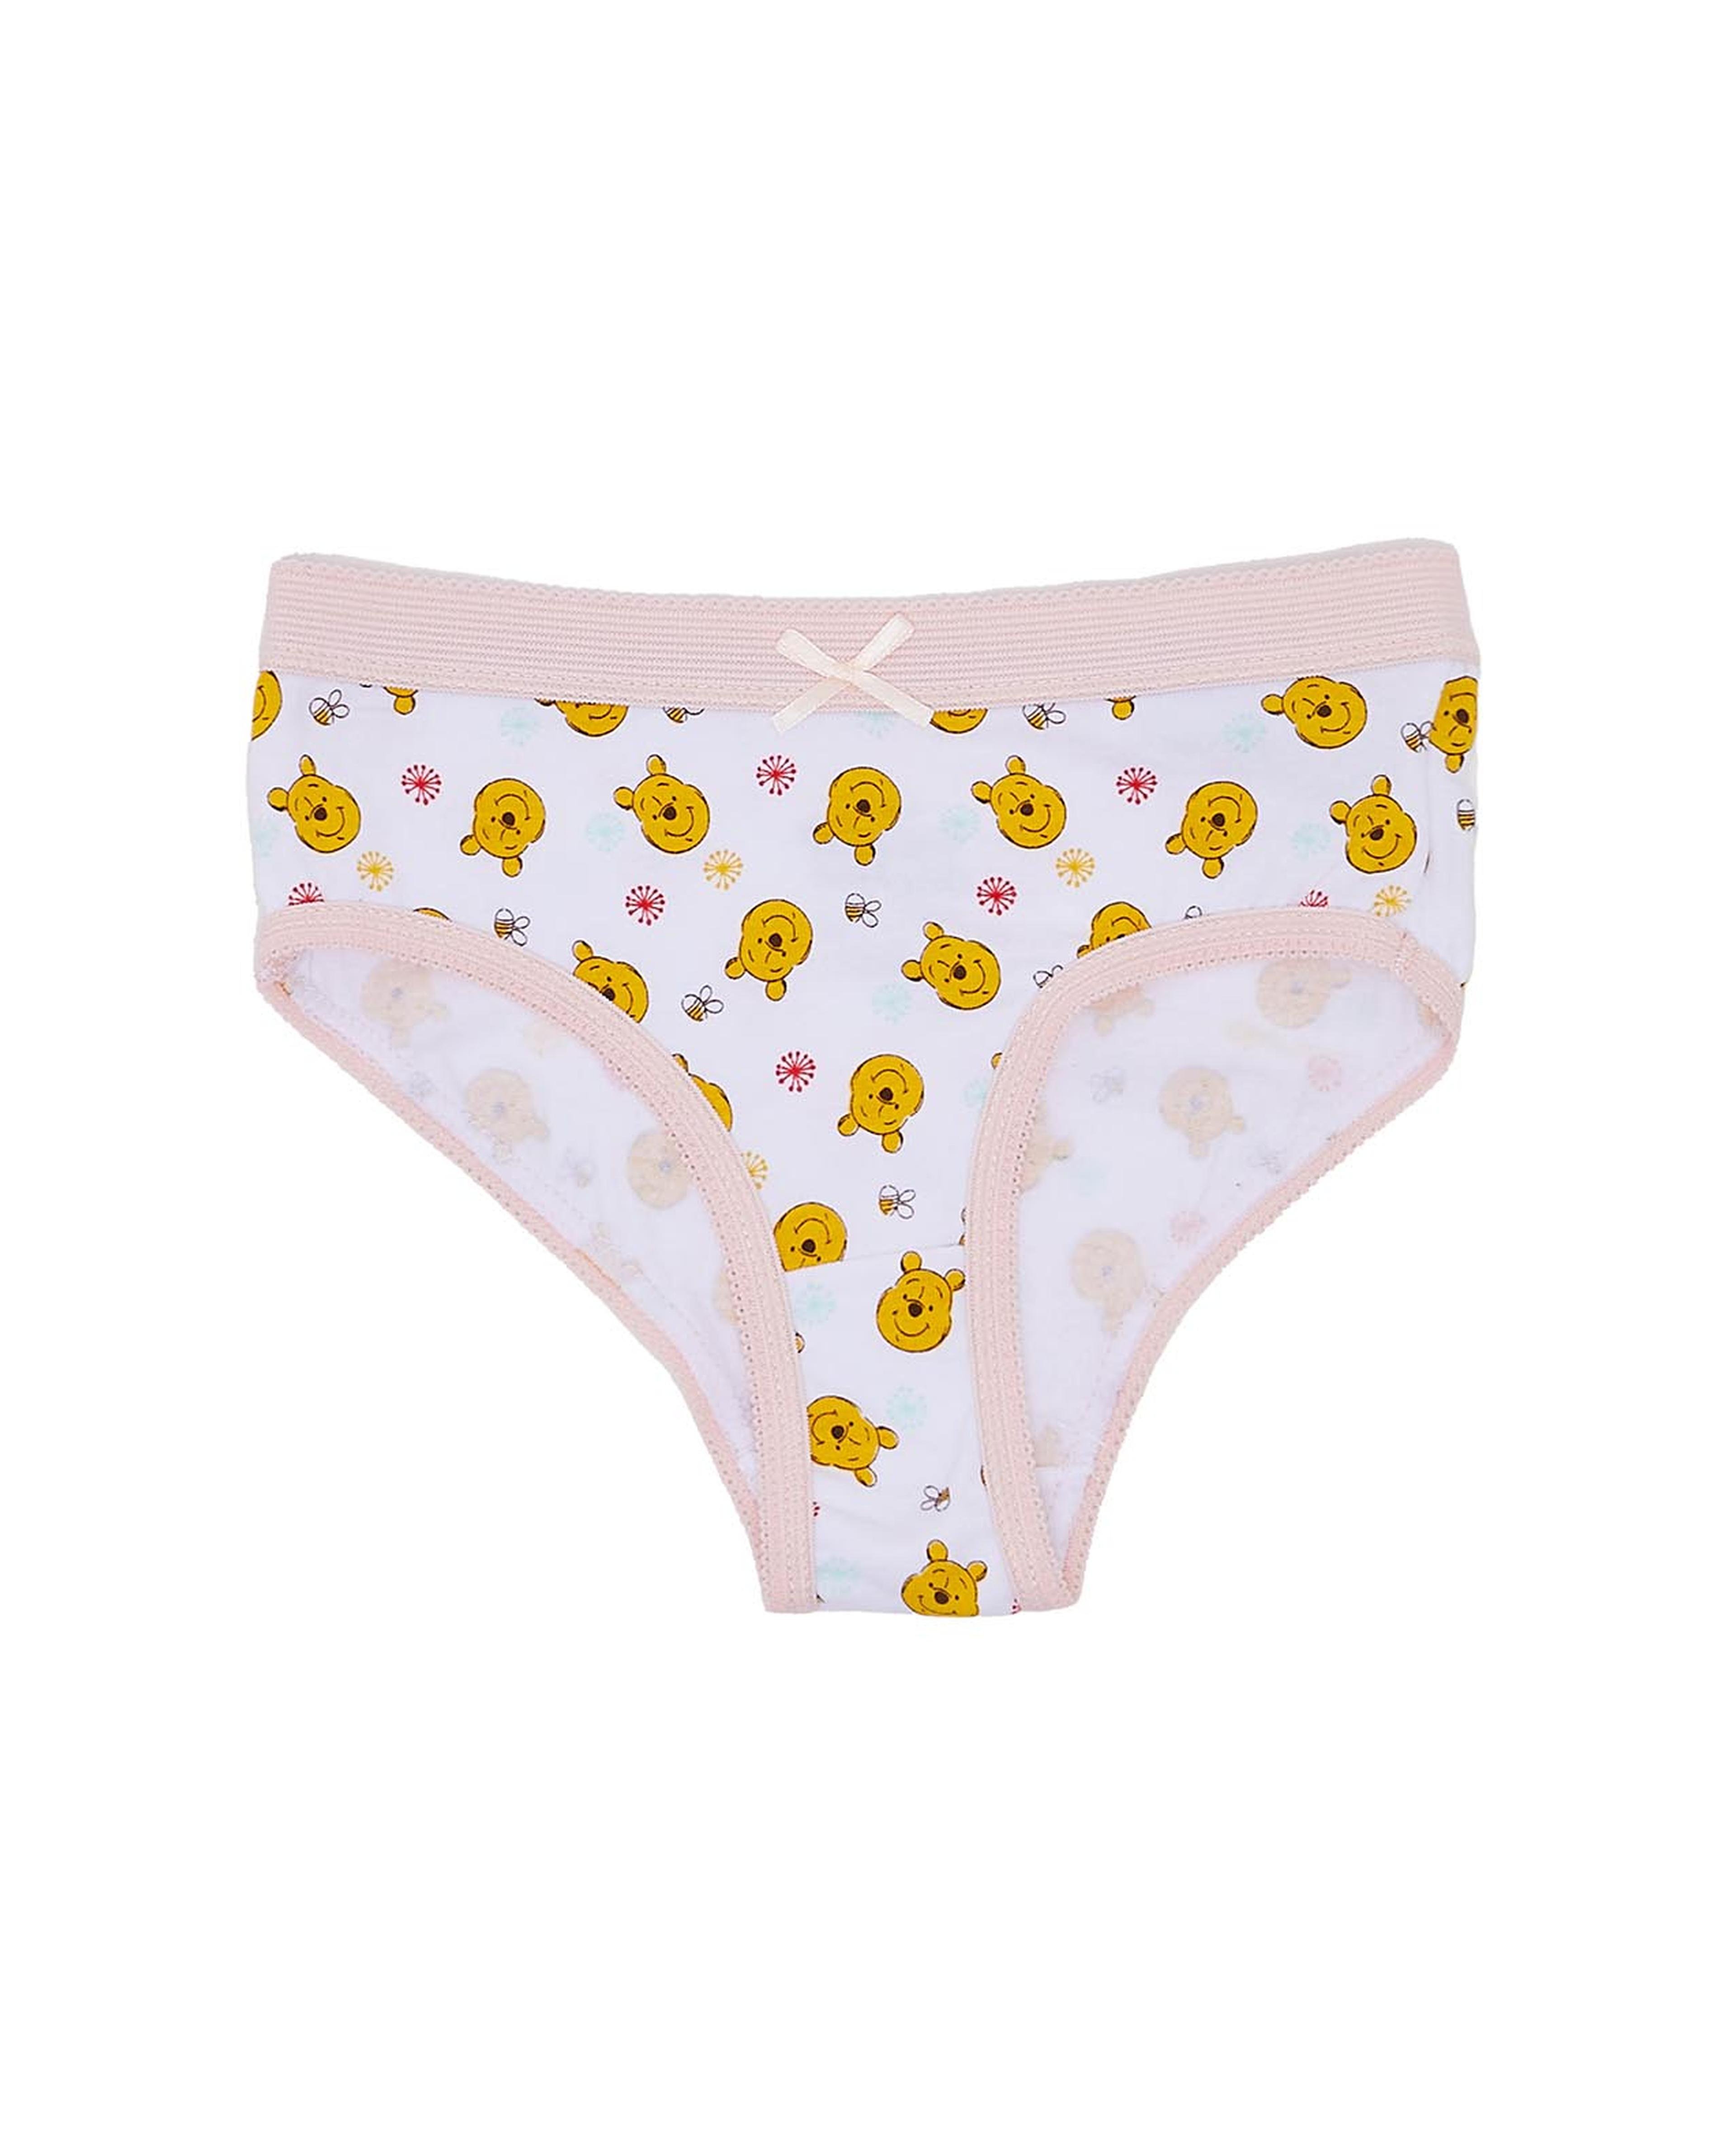 Pack of 3 Winnie-the-Pooh Printed Bikini Briefs